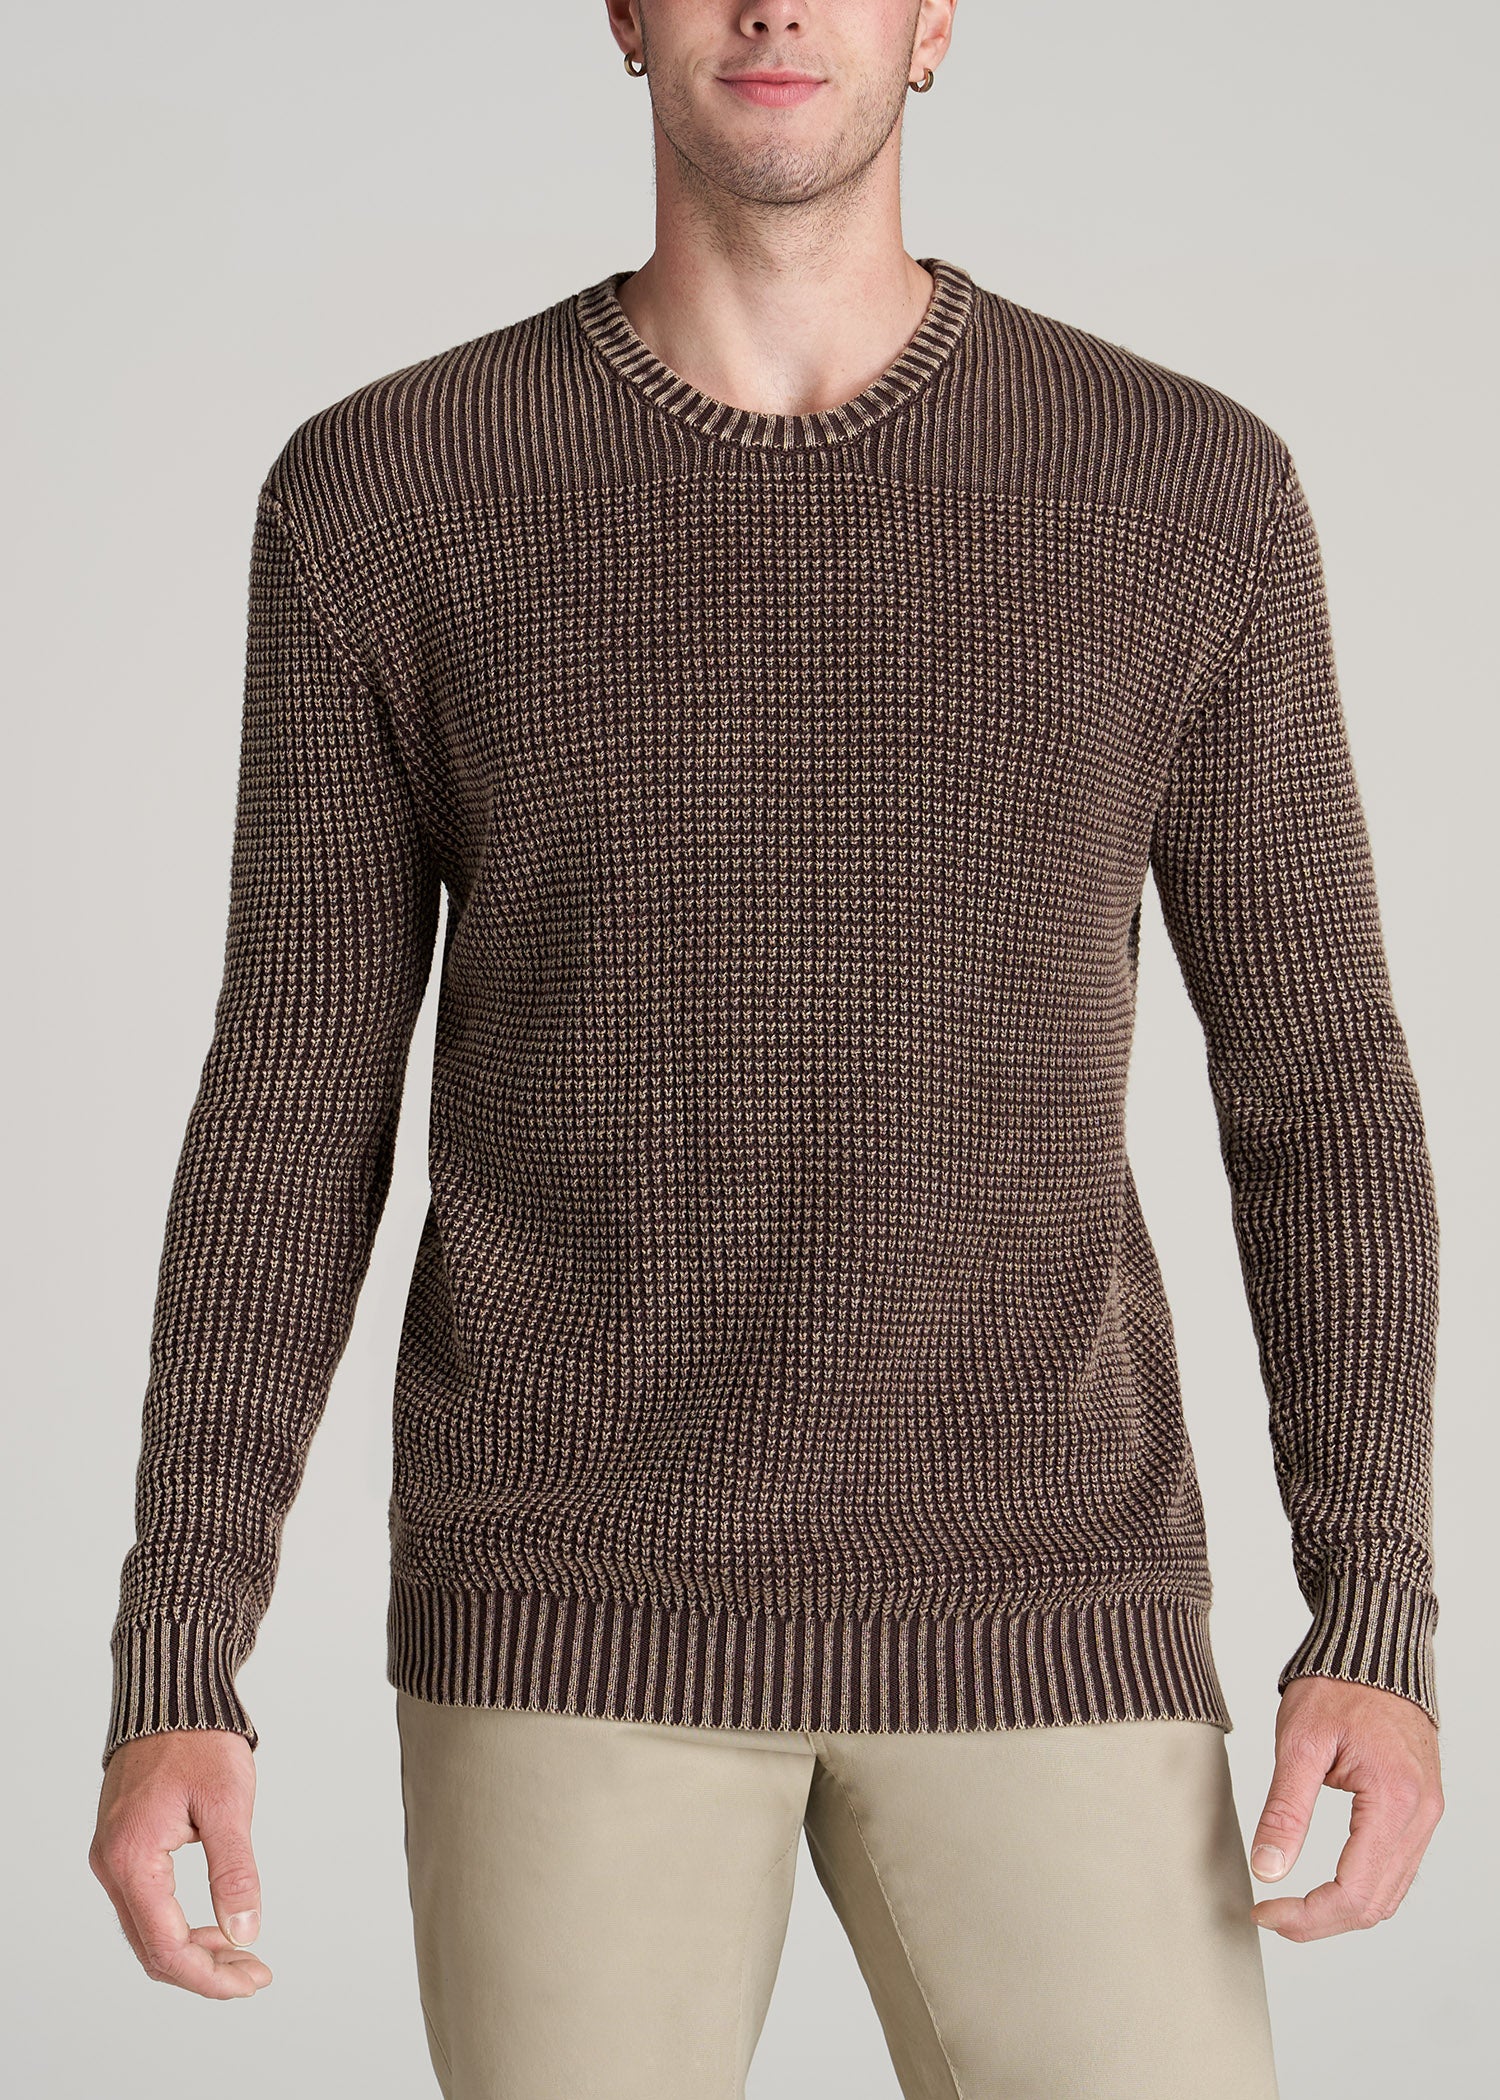       American-Tall-Men-Acid-Wash-Sweater-Dark-Brown-front